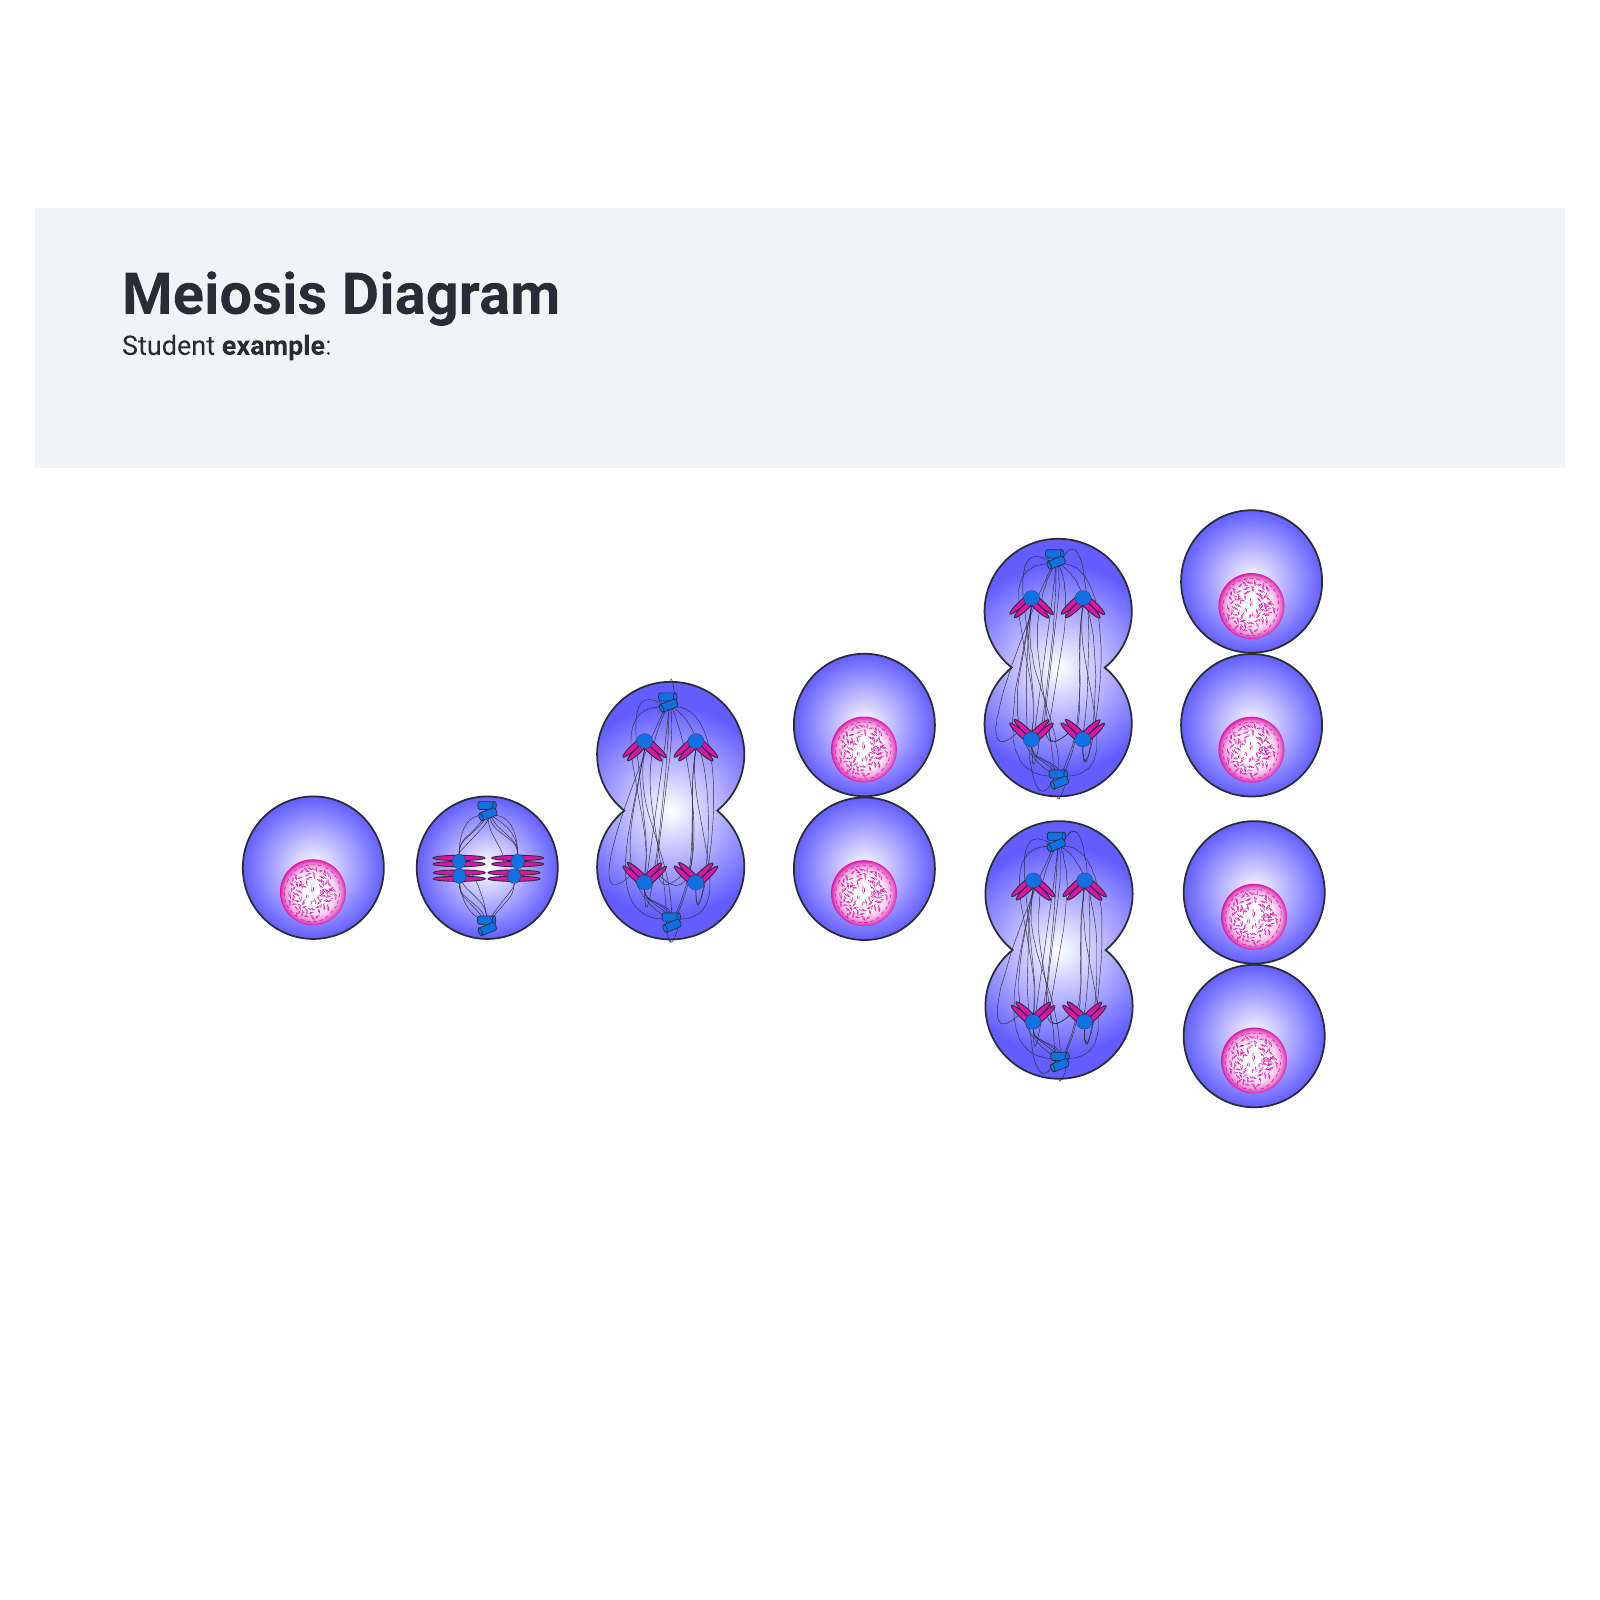 Meiosis example example